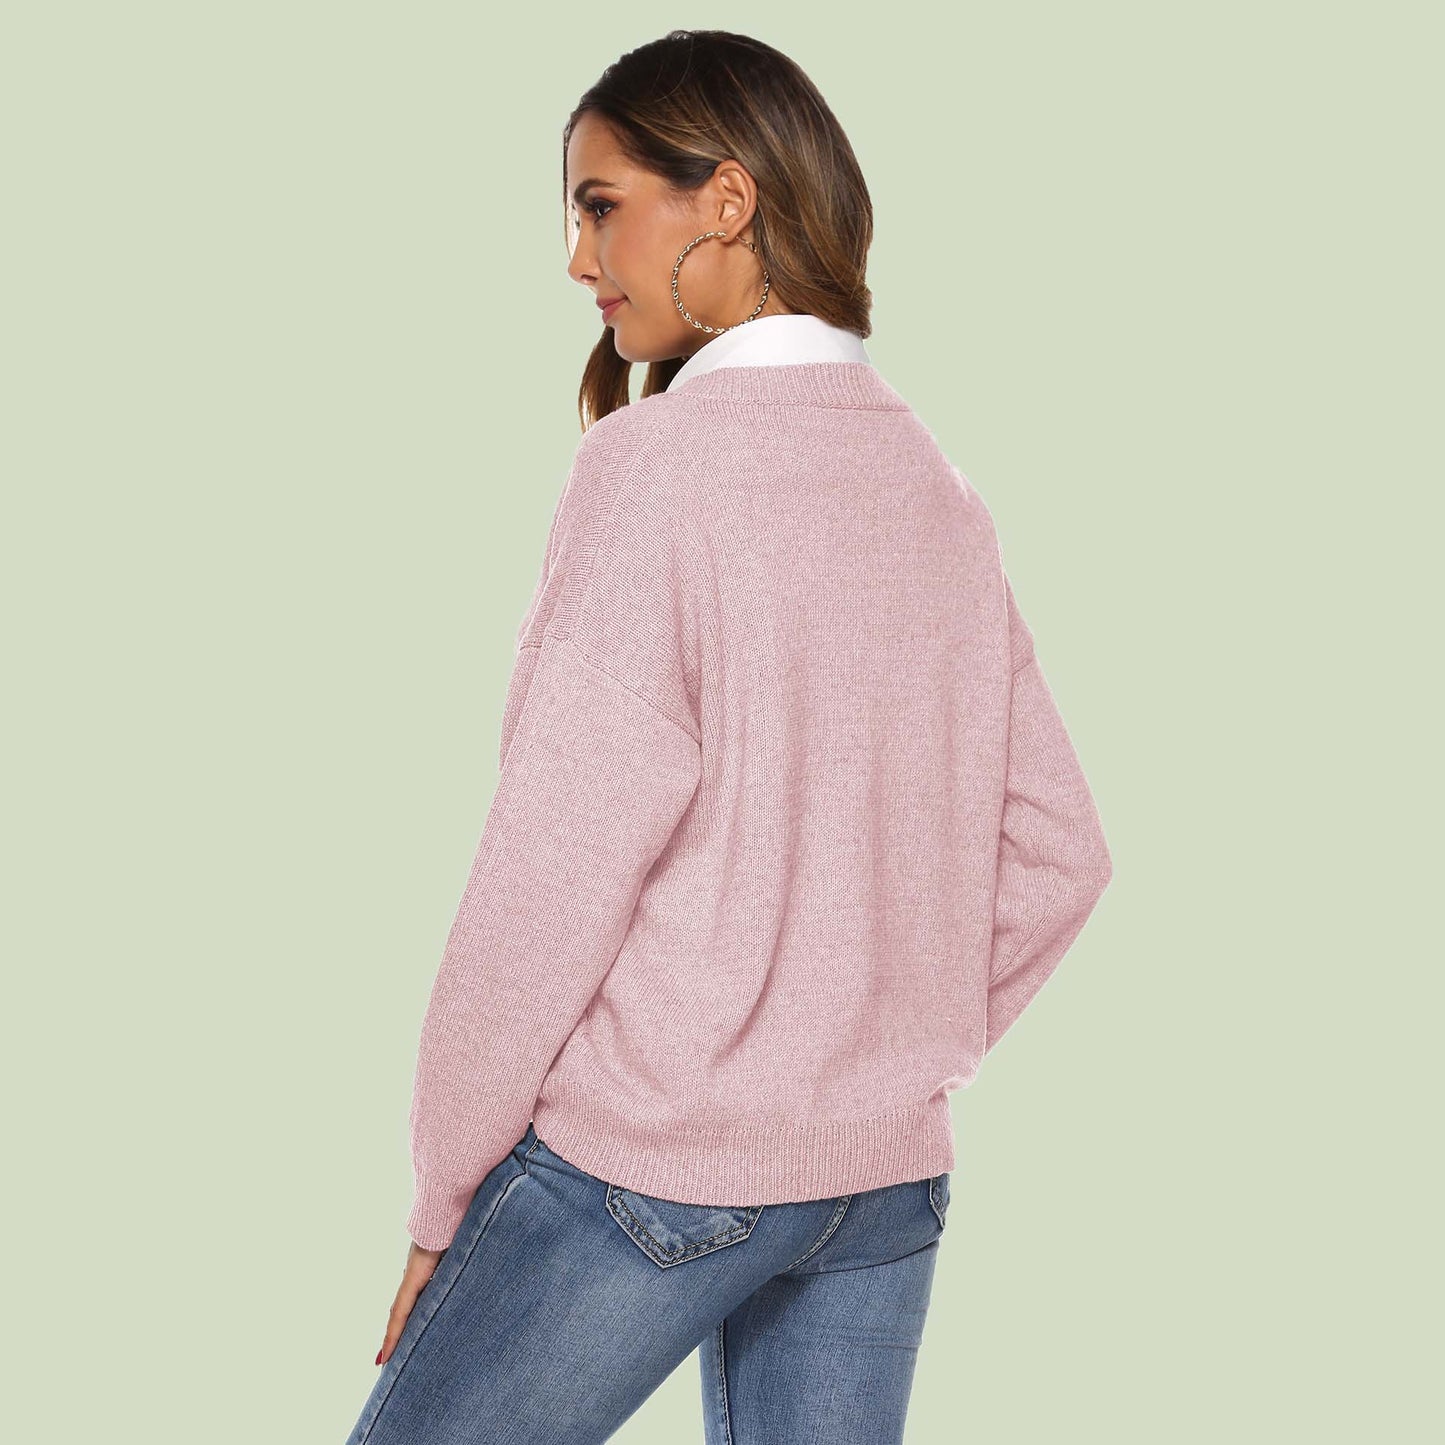 Callie - Stilig genser i mange farger